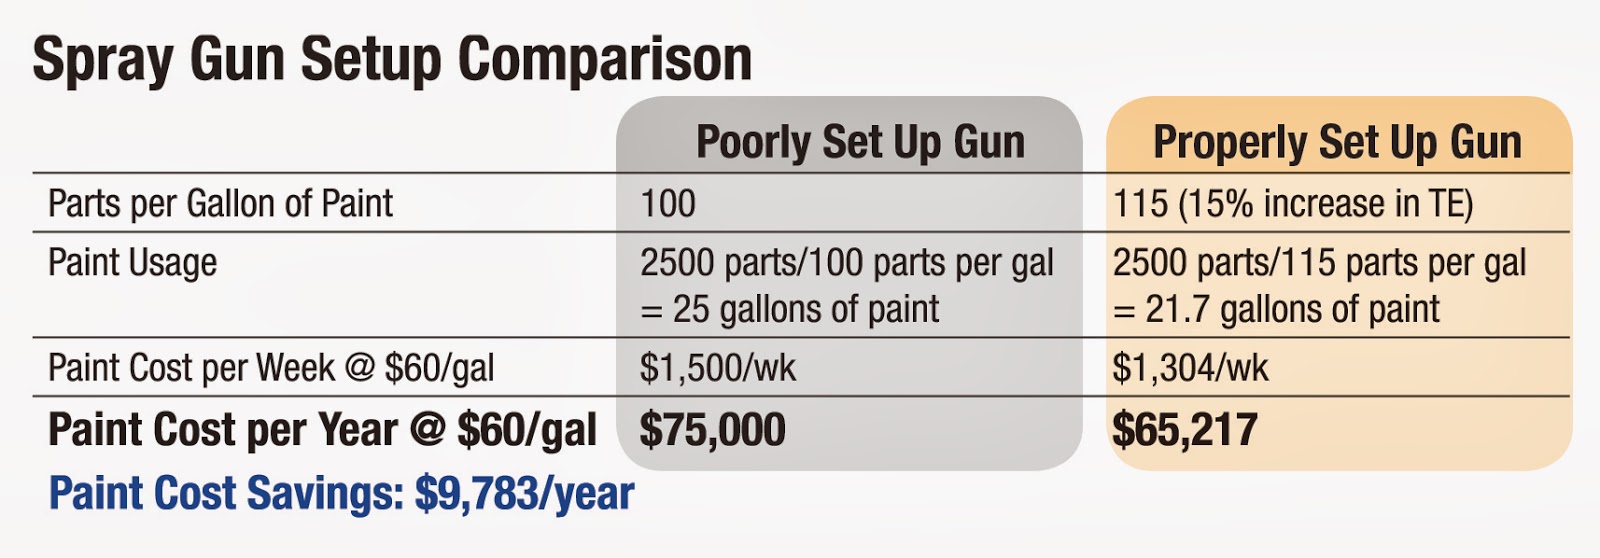 Spray Gun Setup Comparison